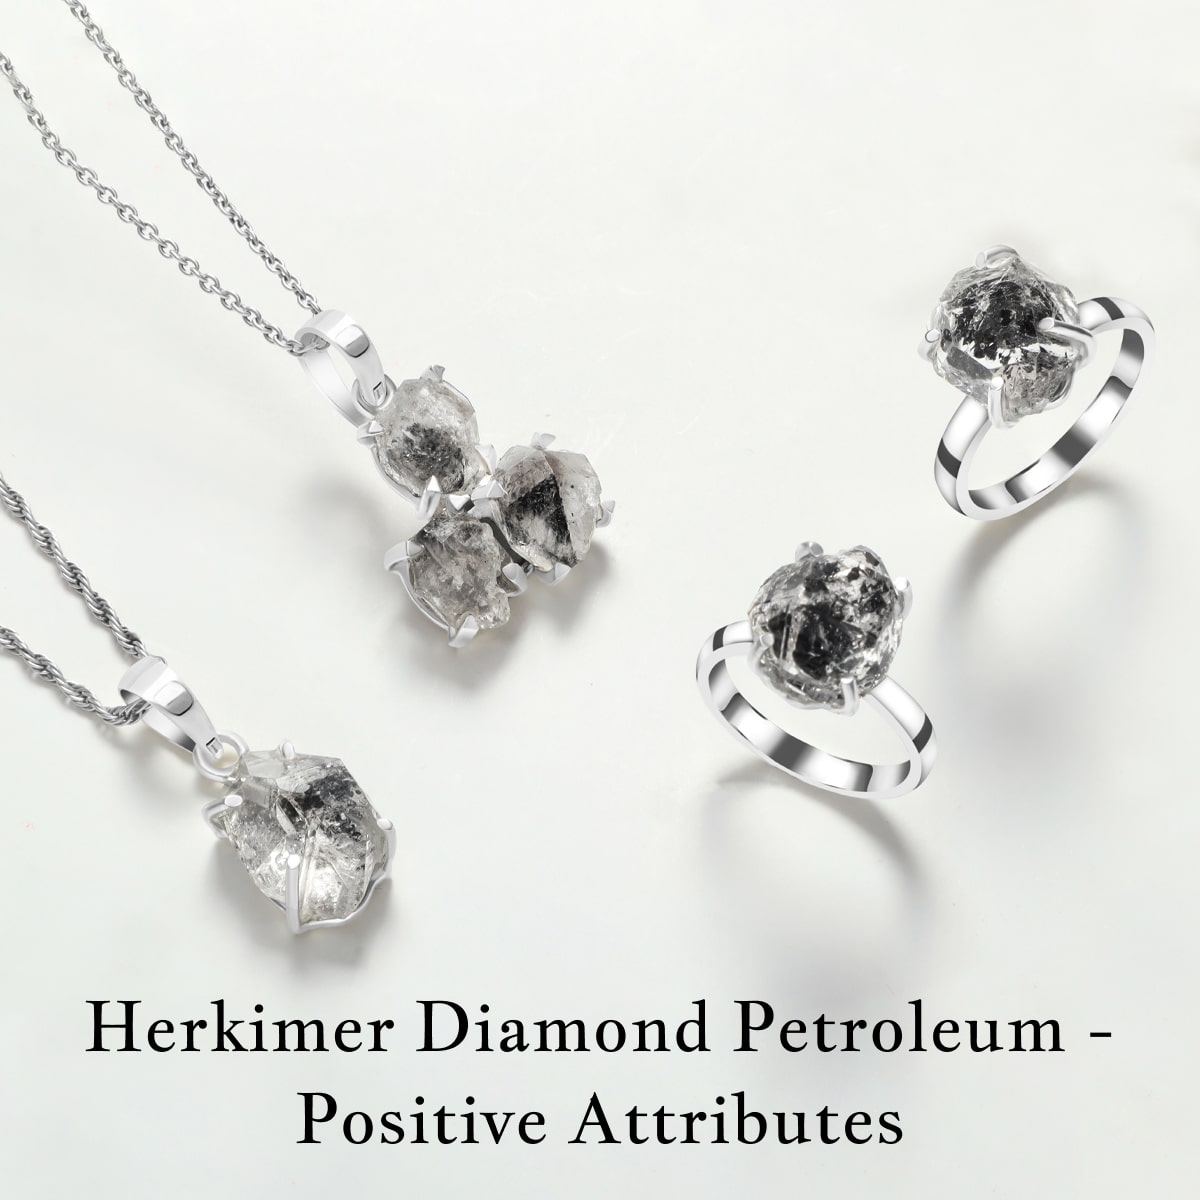 Benefits of Herkimer Diamond Petroleum Stone